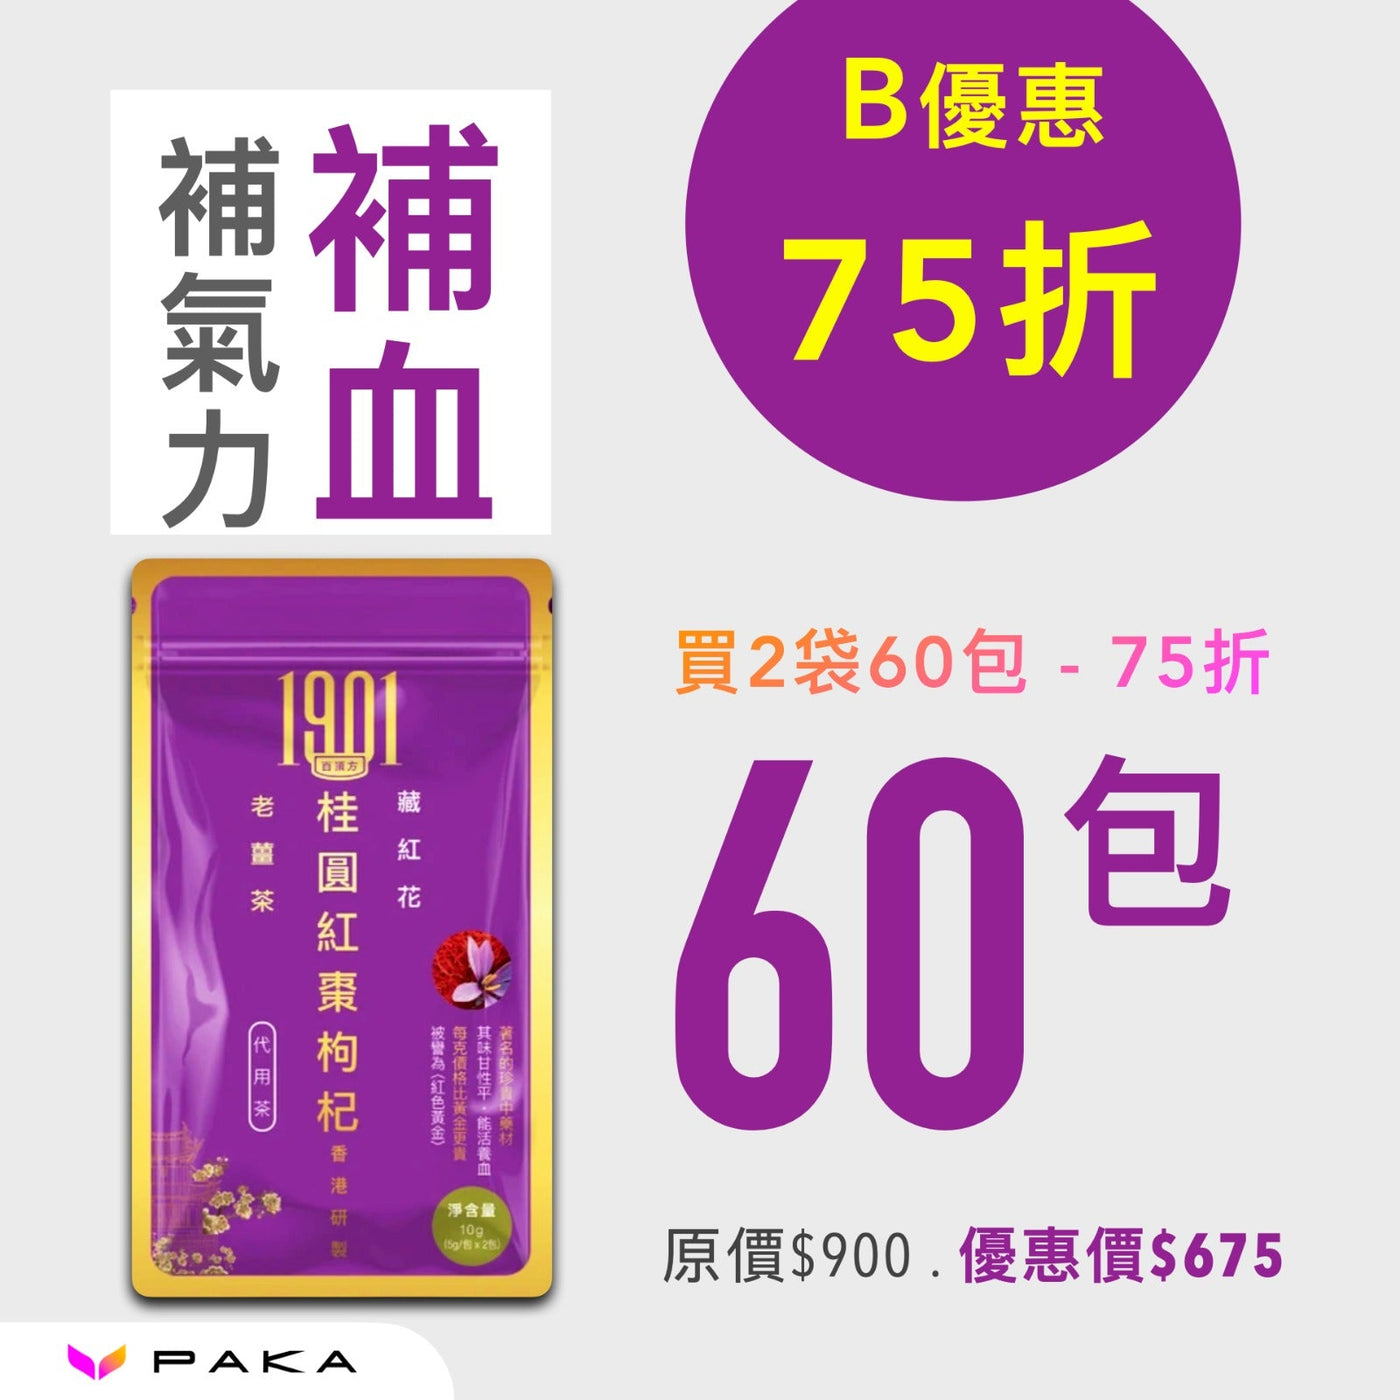 SALE: 補氣血茶療 - 桂圓紅棗枸杞薑茶 Functional Tea 1901 60包 75折 